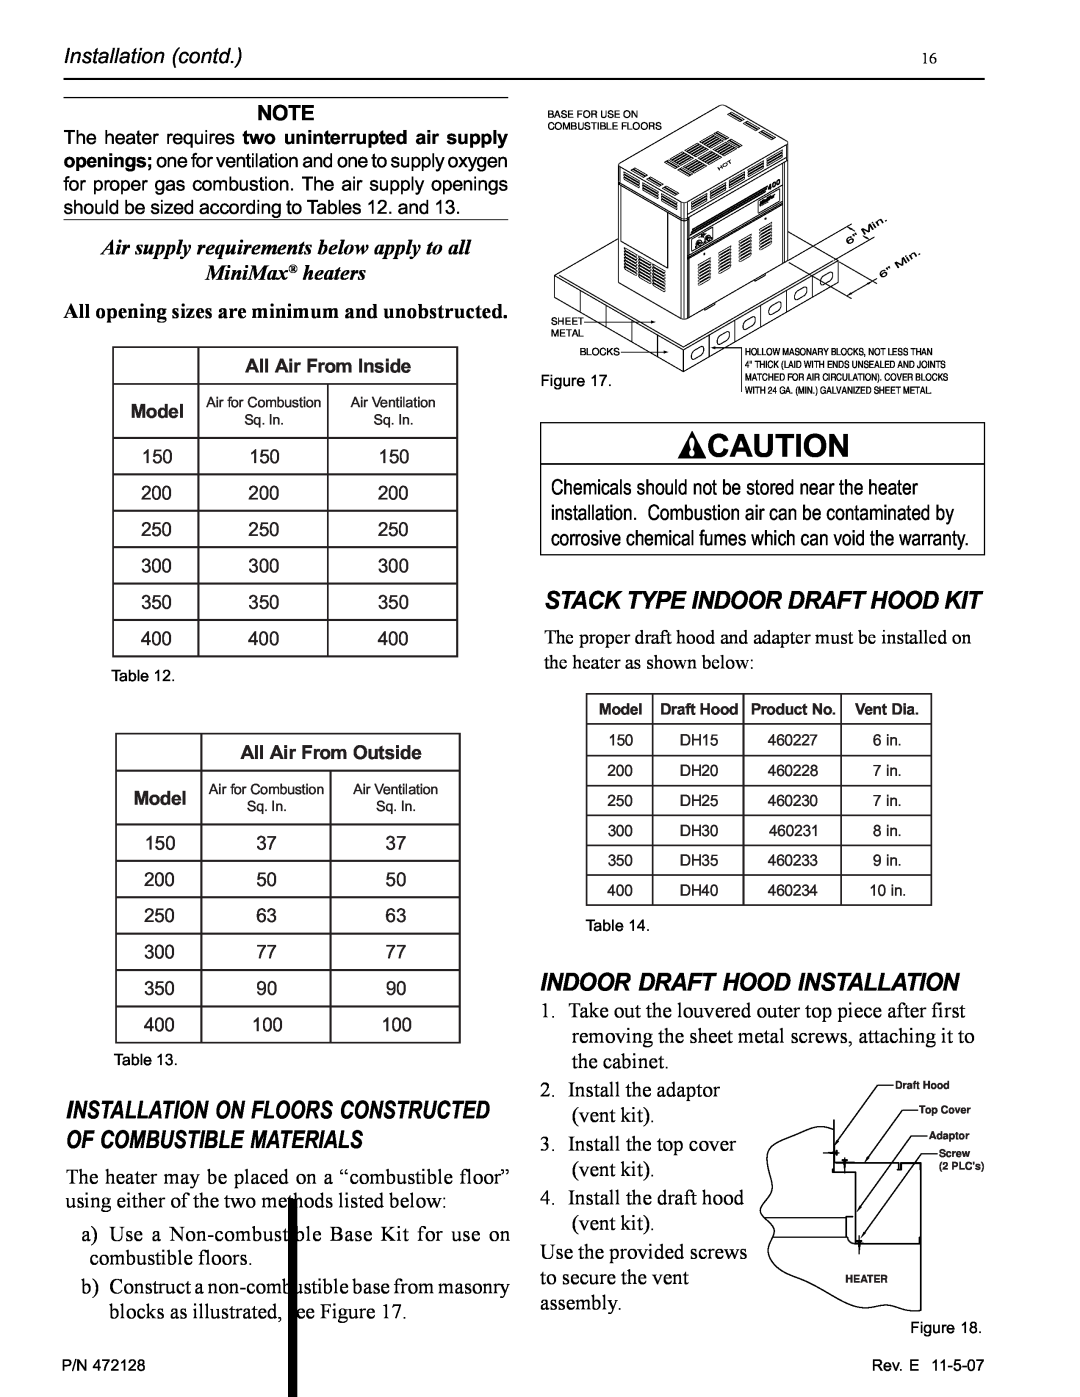 Pentair Hot Tub manual Stack Type Indoor Draft Hood Kit, Indoor Draft Hood Installation, Installation contd 